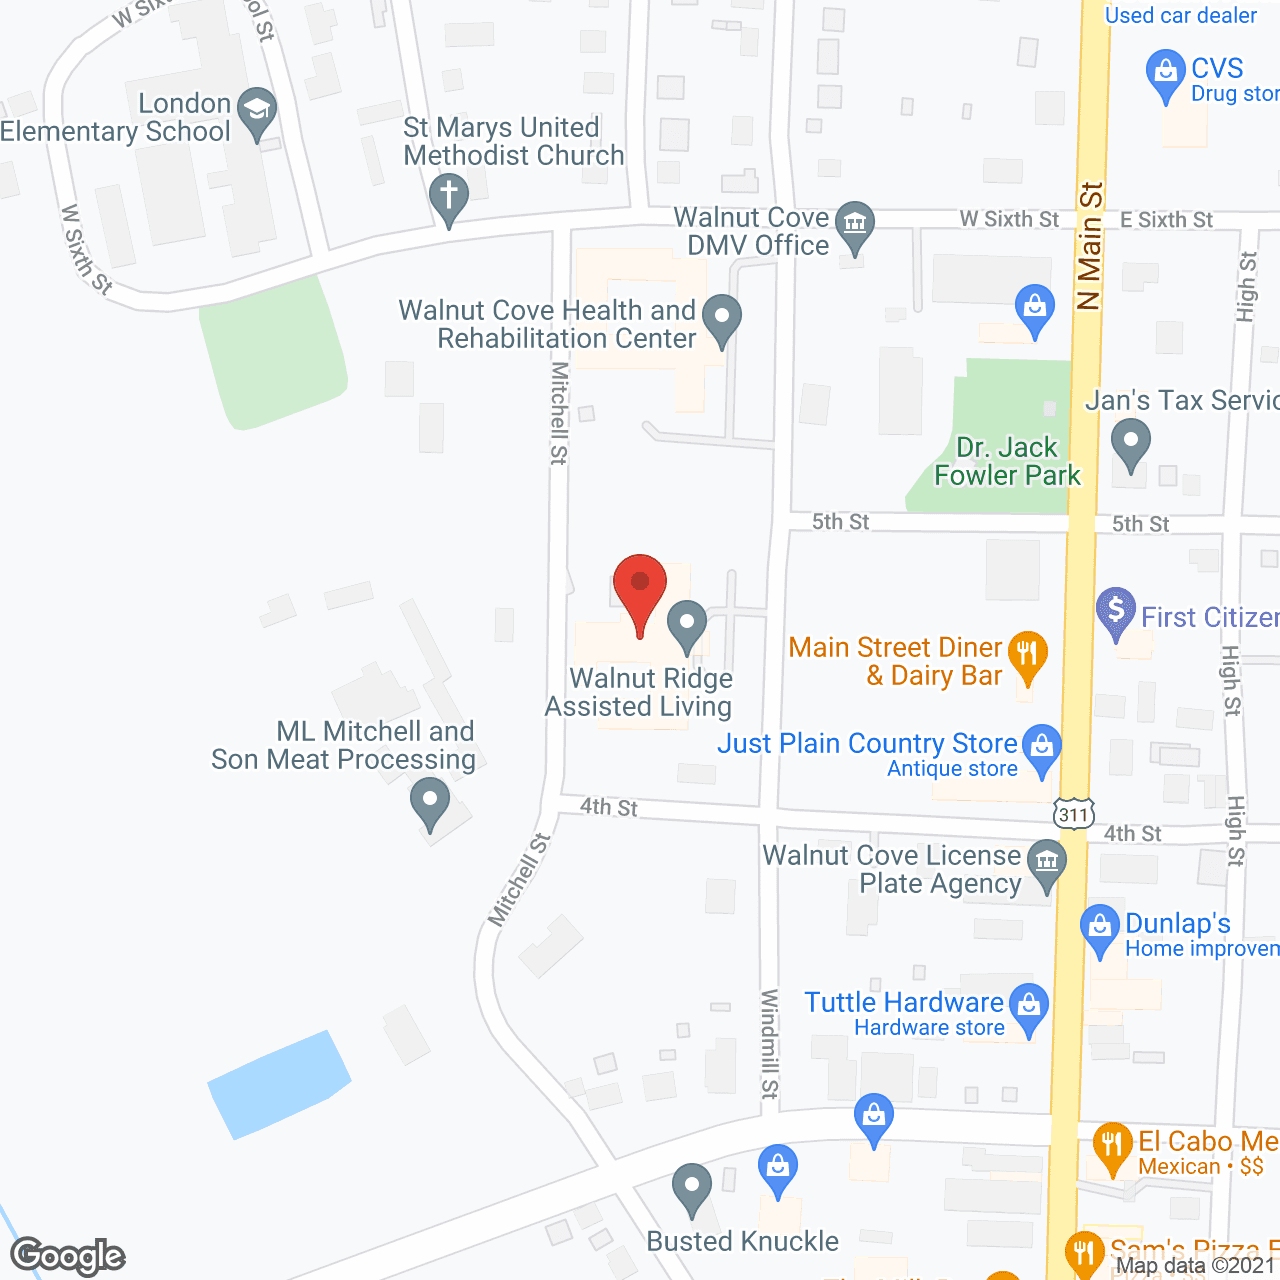 Walnut Ridge in google map